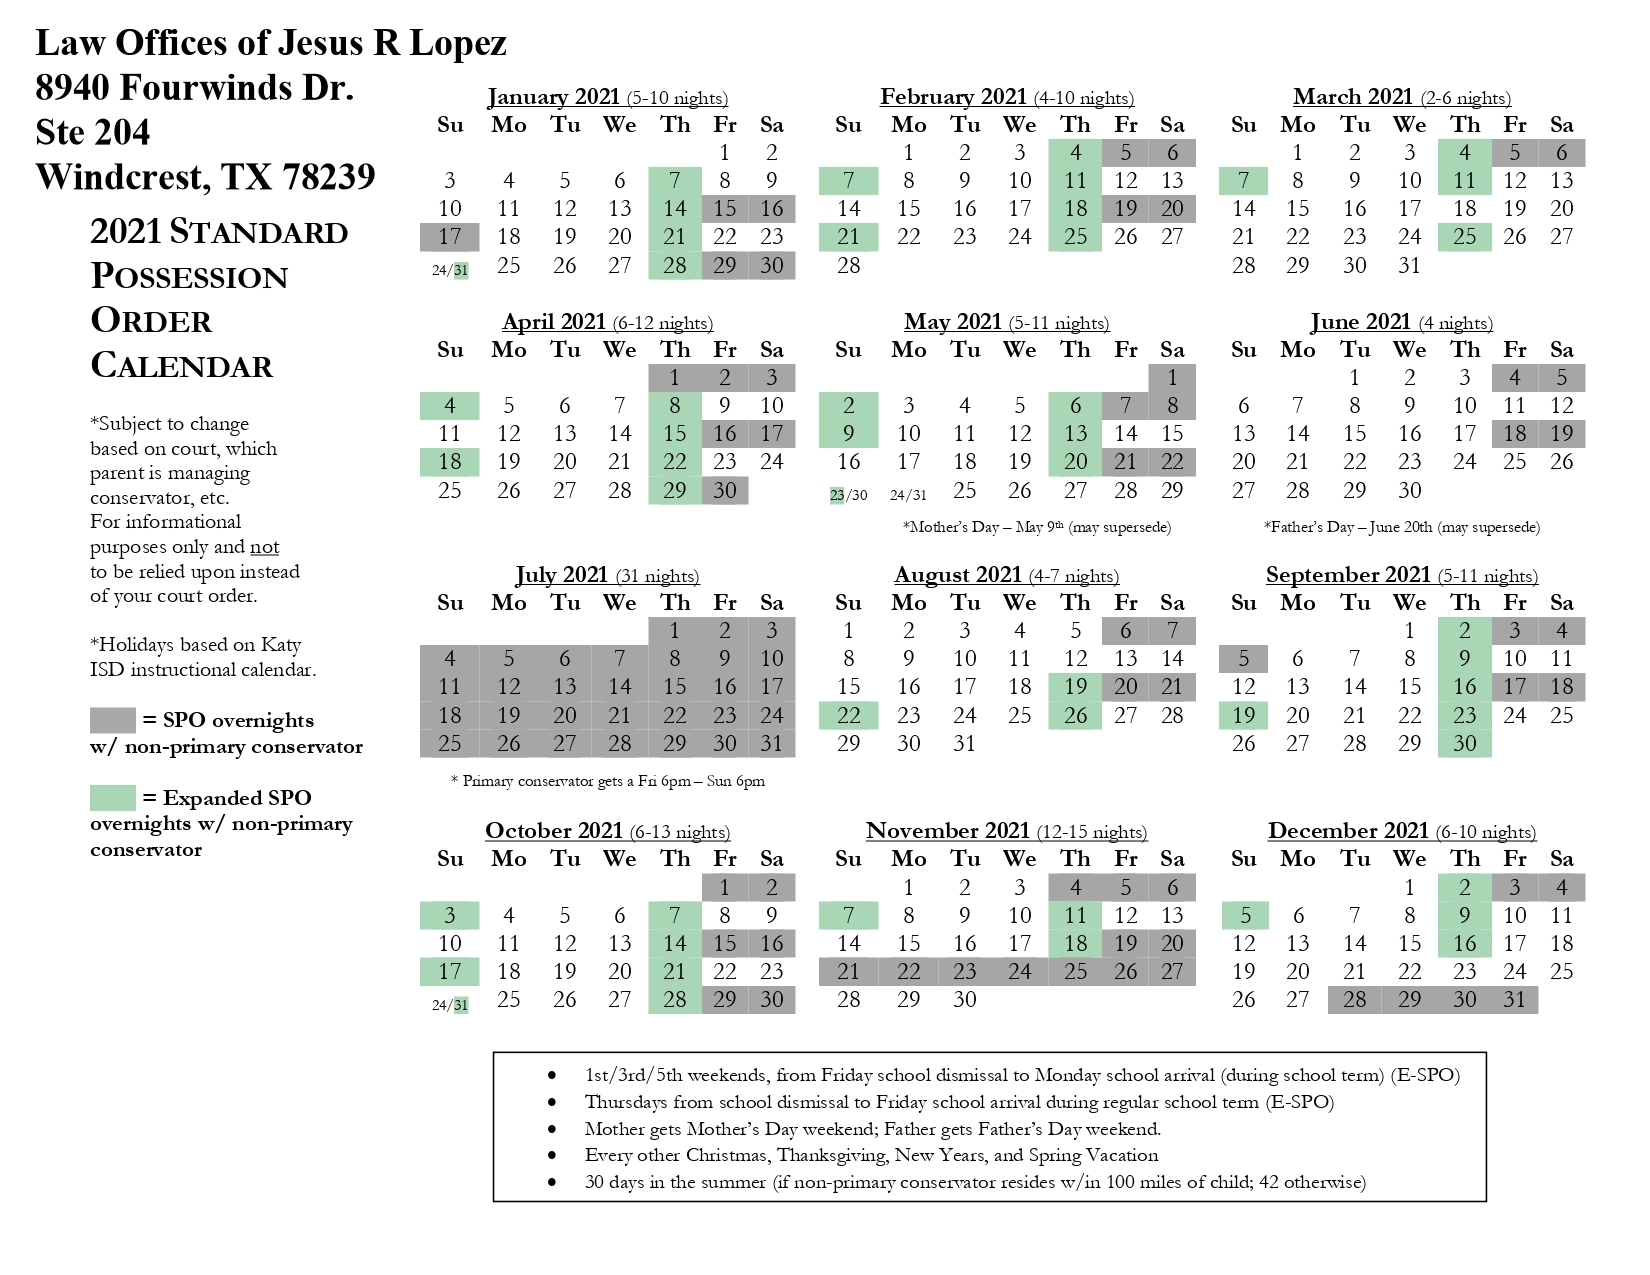 Texas Standard Visitation Calendar 2022 2021-Hlf-Standard-Possession-Order-Calendar (1)_Page-0001 | Law Offices Of  Jesus R. Lopez